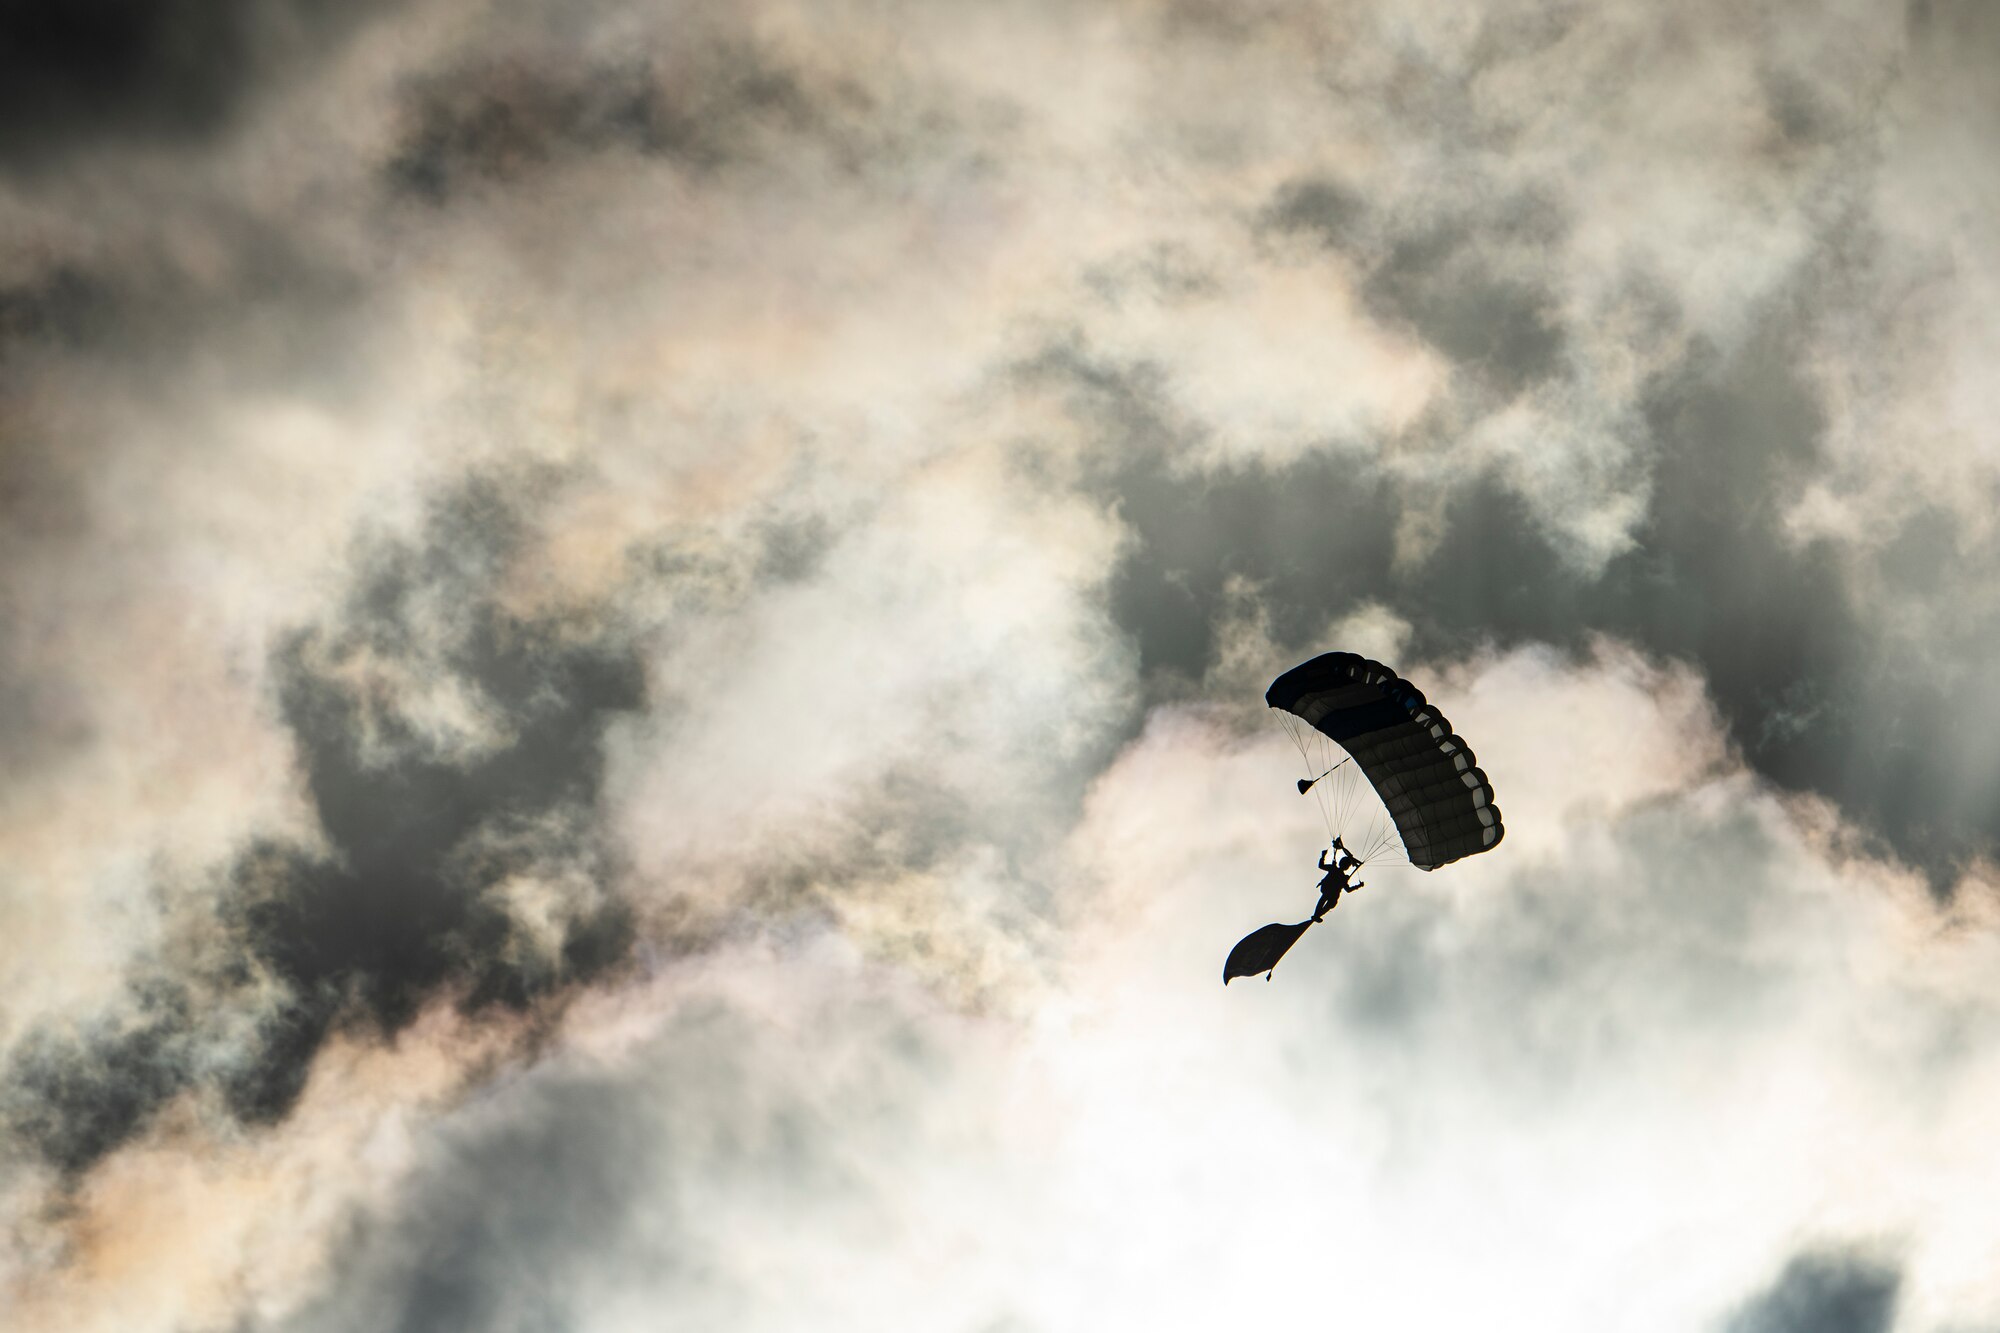 a parachutist descending from the sky